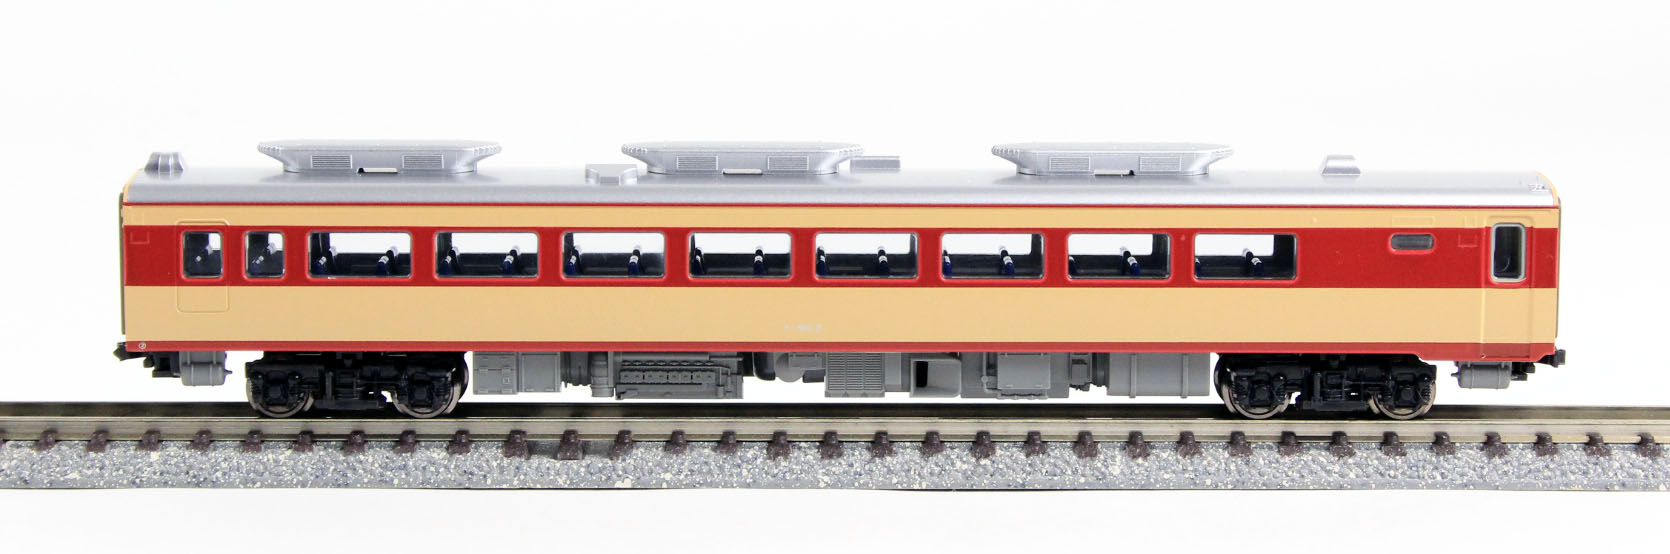 KATO カトー 6064-2 キハ80 初期形 鉄道模型 Nゲージ | 鉄道模型 